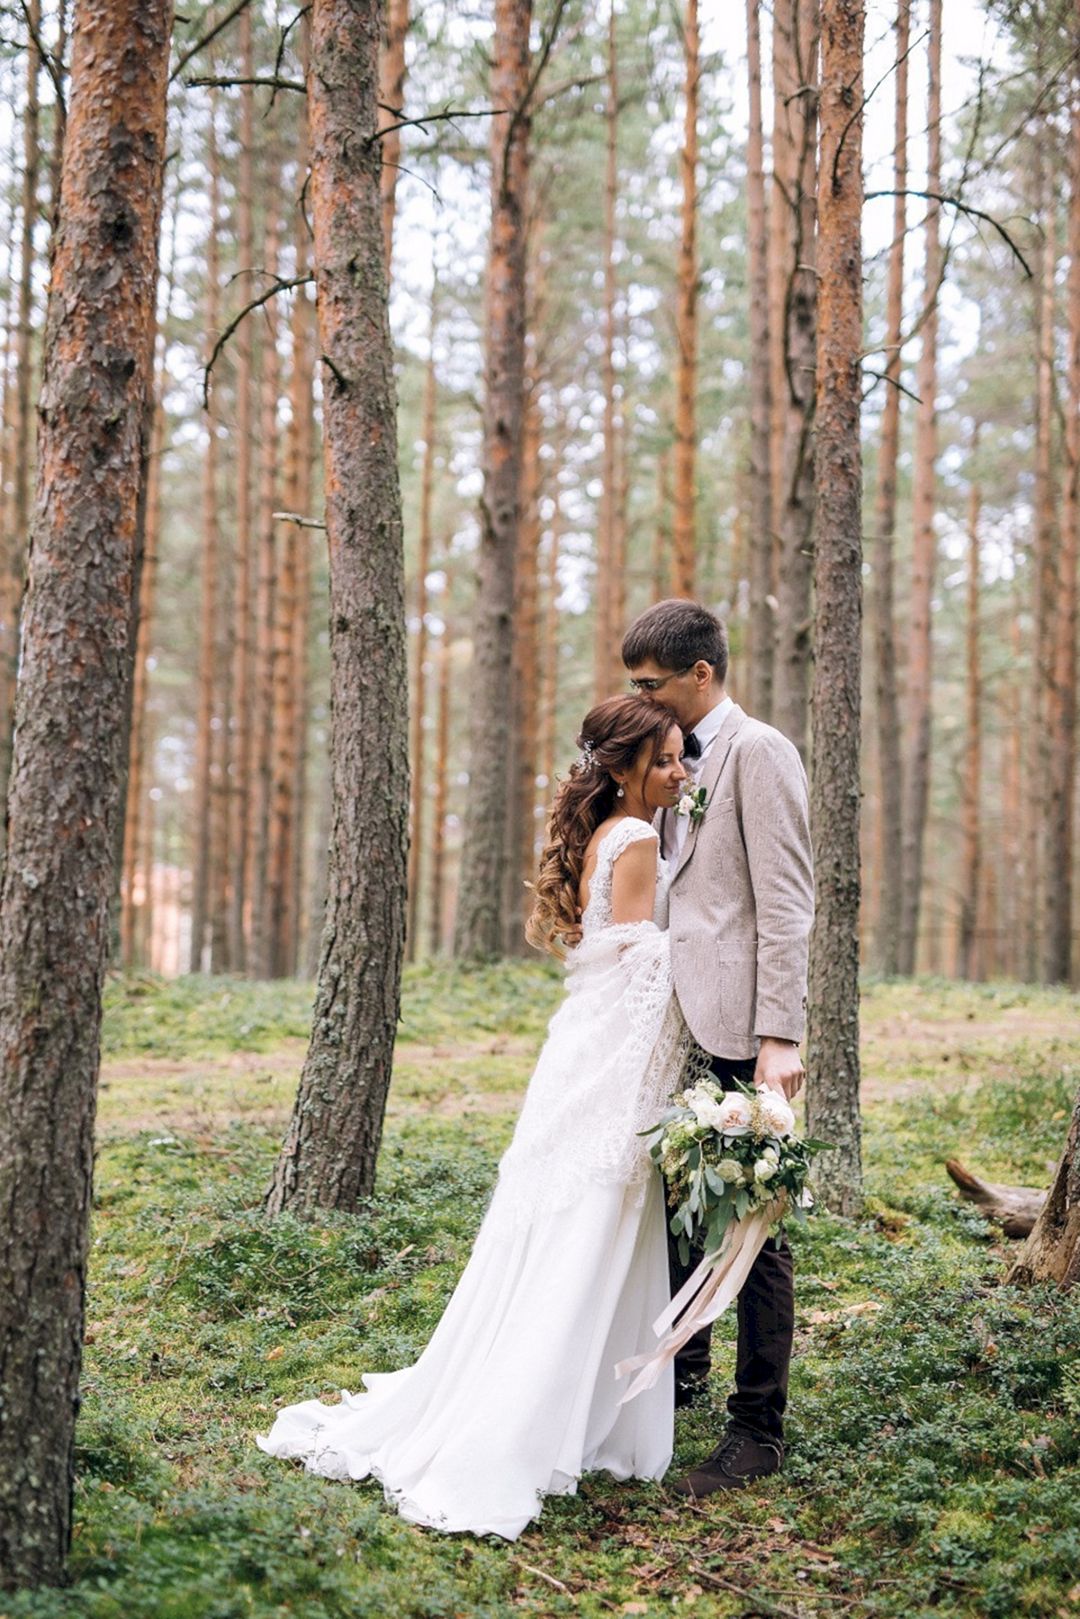 Wedding proposal in nature from weddywood.ru